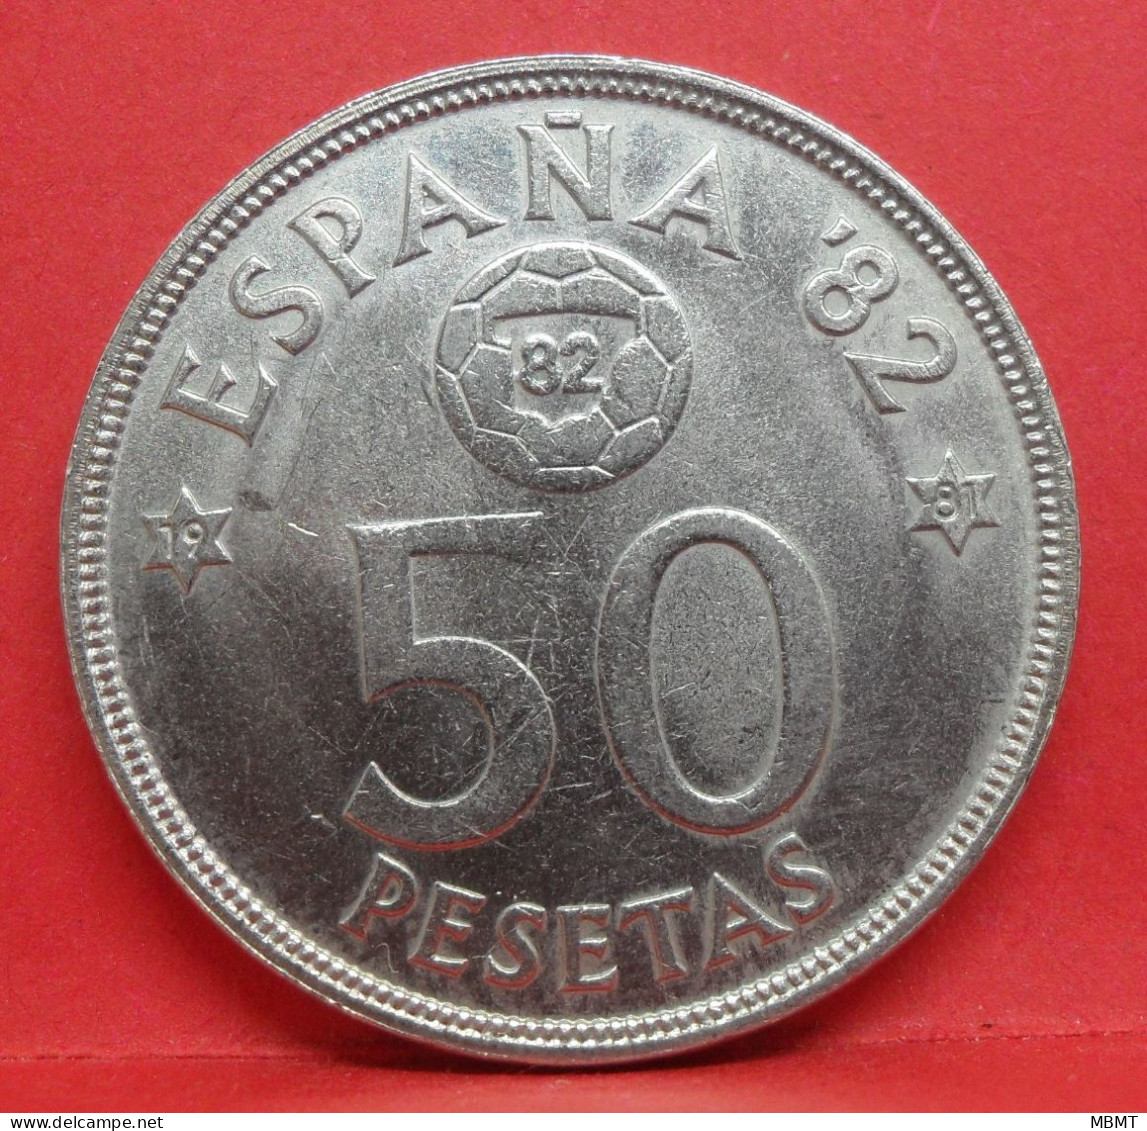 50 Pesetas 1980 étoile 81 - TTB - Pièce Monnaie Espagne - Article N°2486 - 50 Pesetas